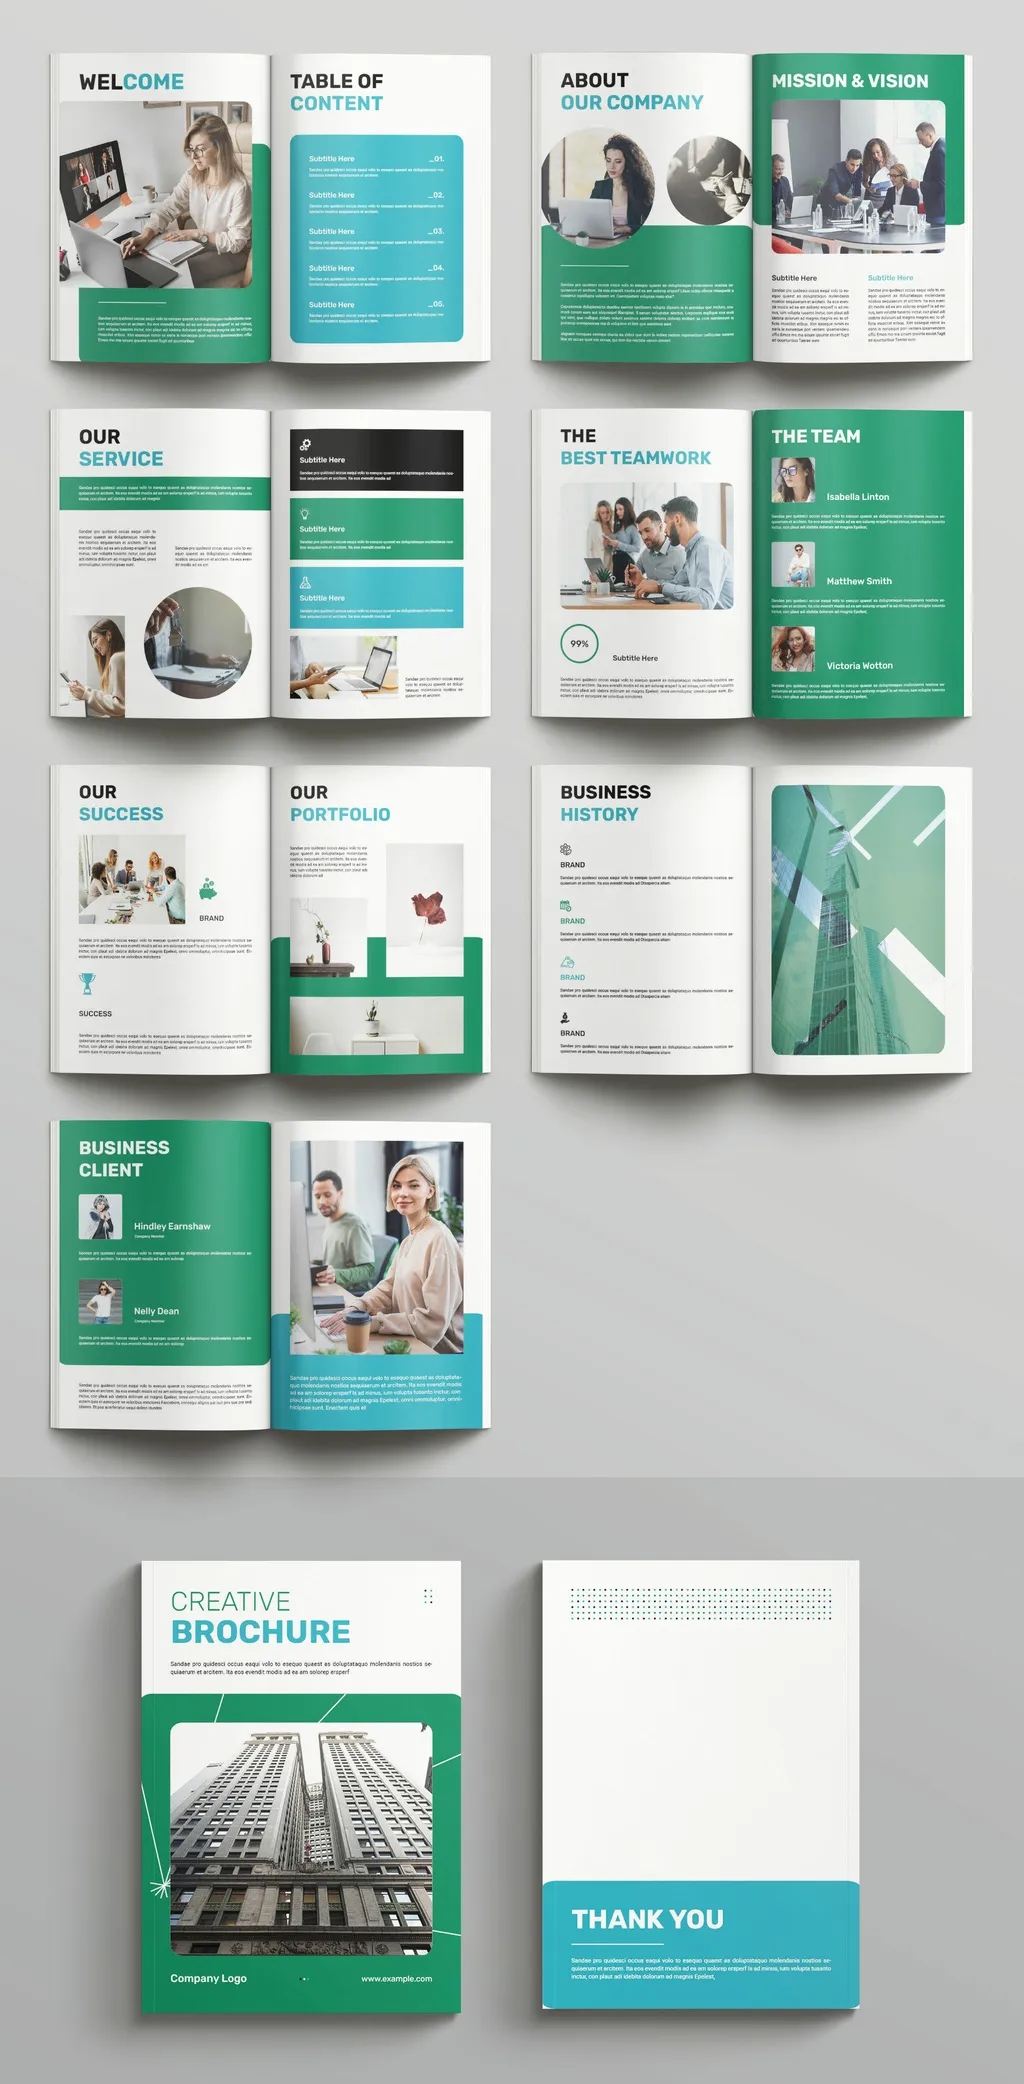 Adobestock - Corporate Brochure Design Layout Template 716694325